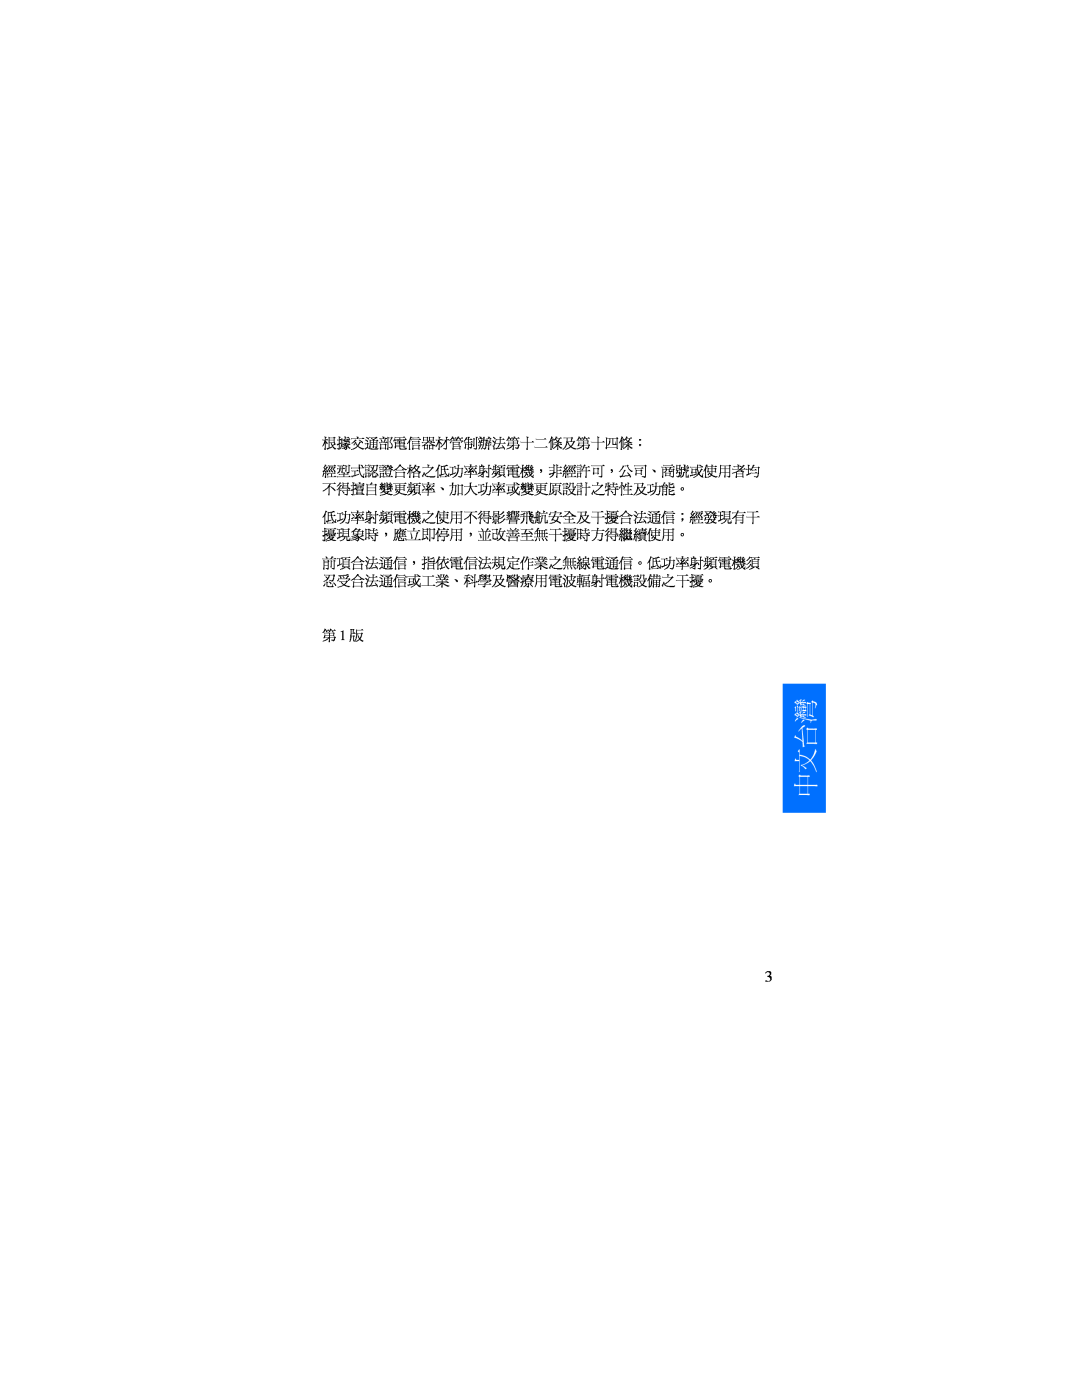 Nokia HDW-3 manual 中文台灣, 根據交通部電信器材管制辦法第十二條及第十四條：, 第 1 版 